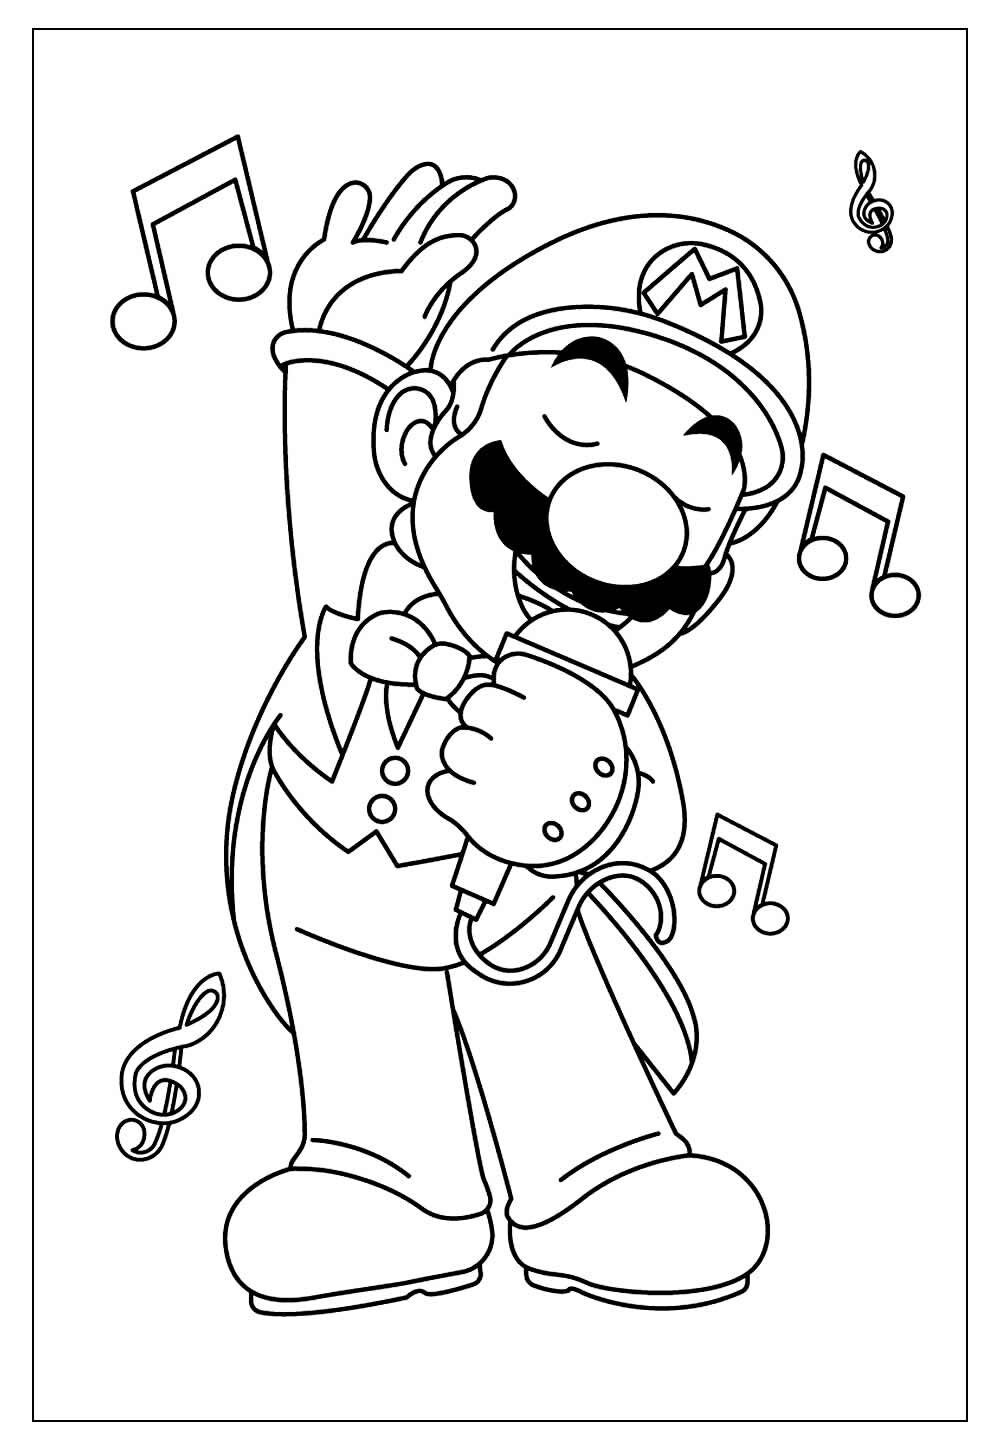 Super Mario – Bowser 02 – Imagens para Colorir